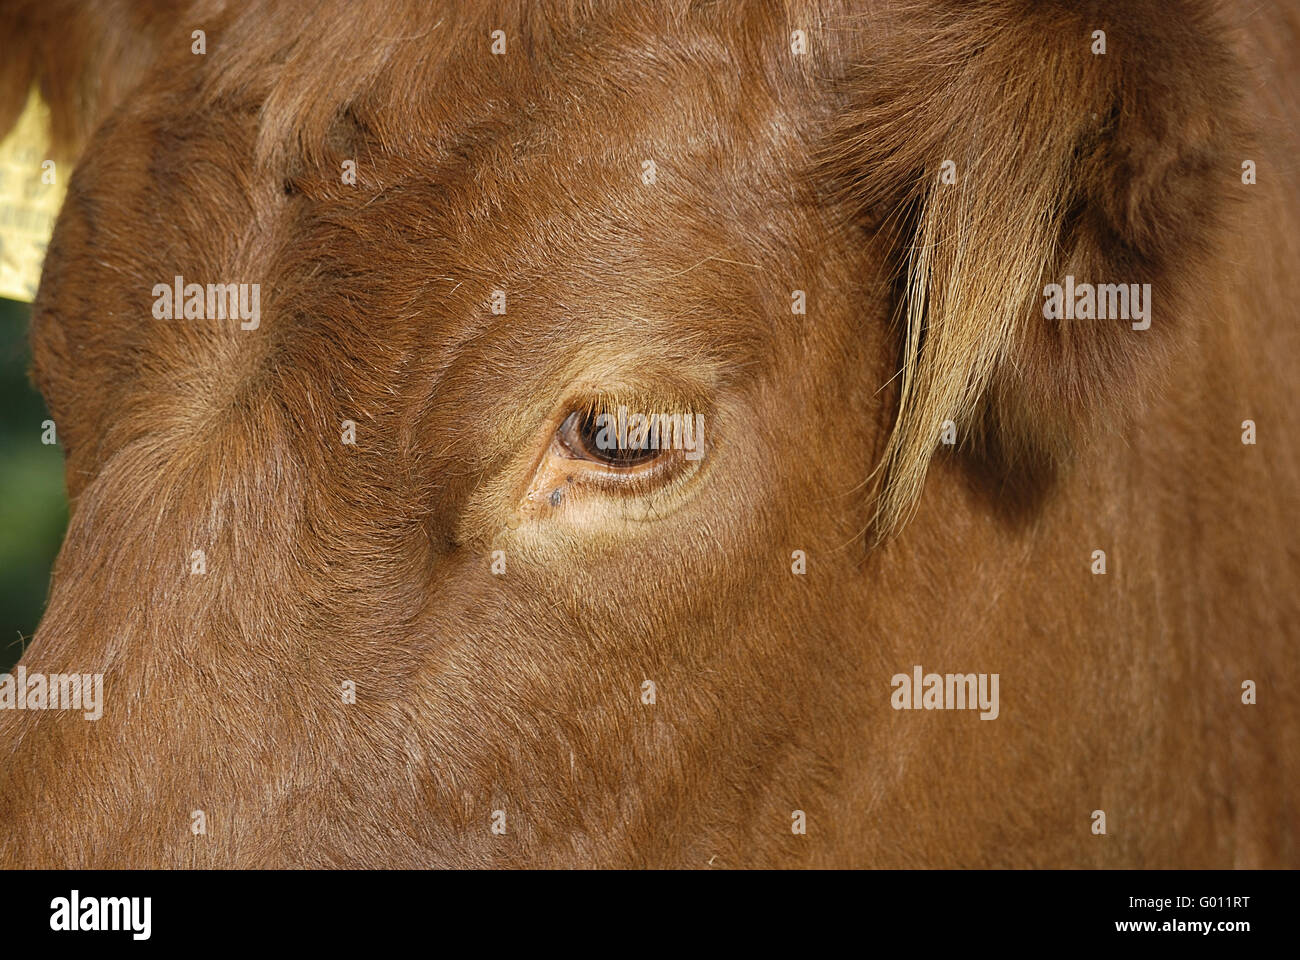 kuhauge - eye of a cow Stock Photo